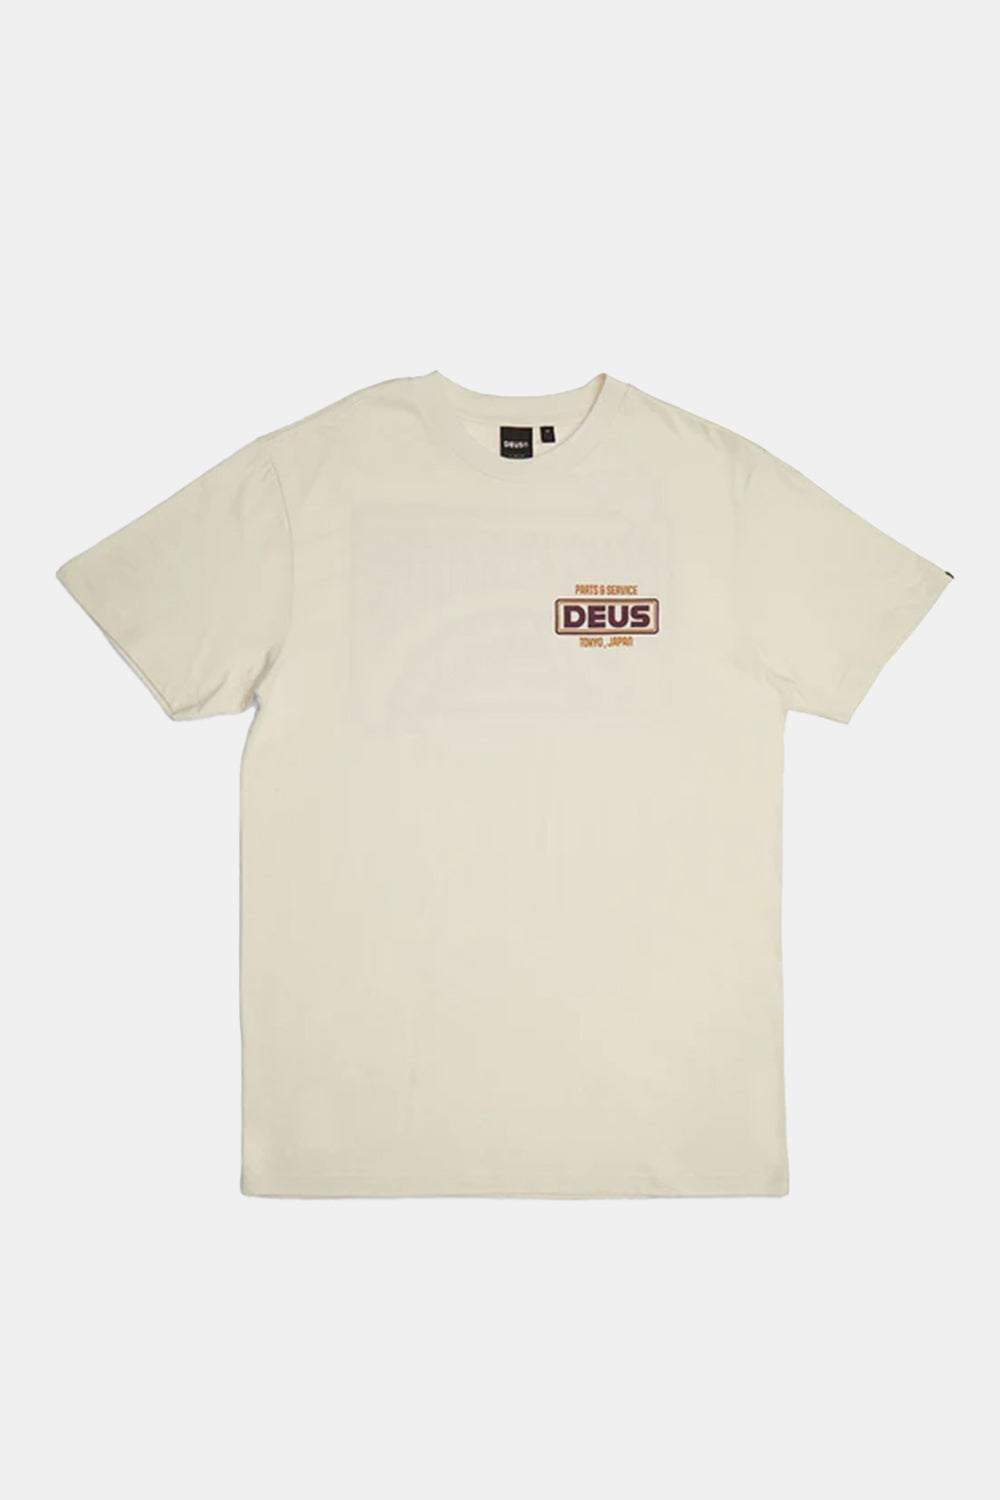 Deus Depot Organic Cotton T-shirt (Vintage White)